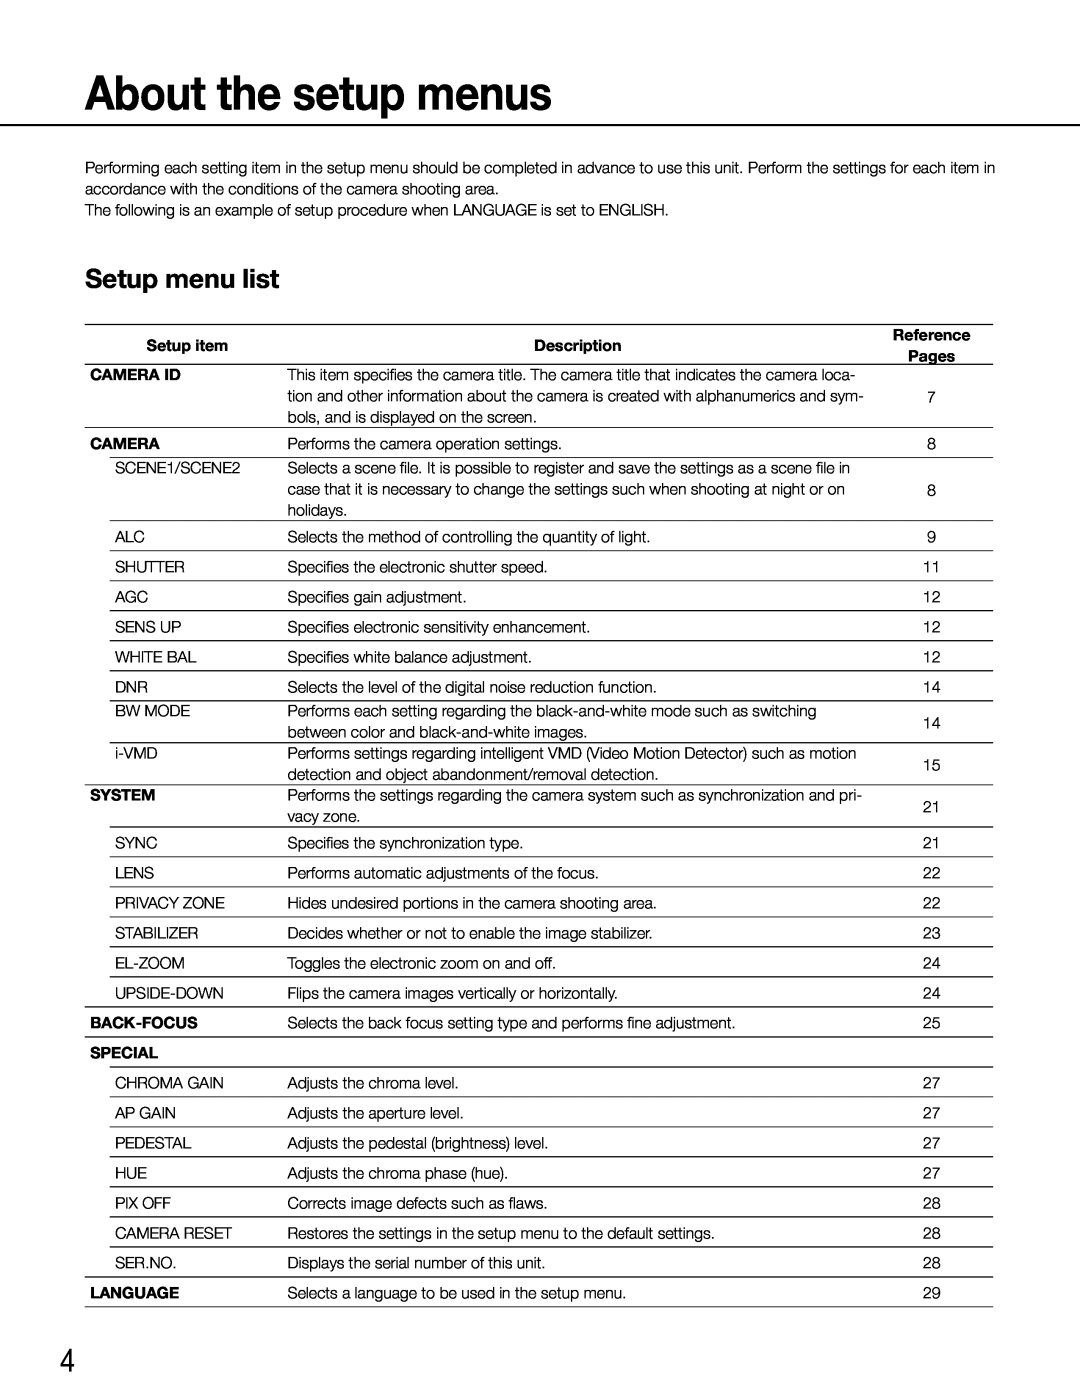 Panasonic WV-CW504FK About the setup menus, Setup menu list, Setup item, Description, Reference, Pages, Camera Id, System 